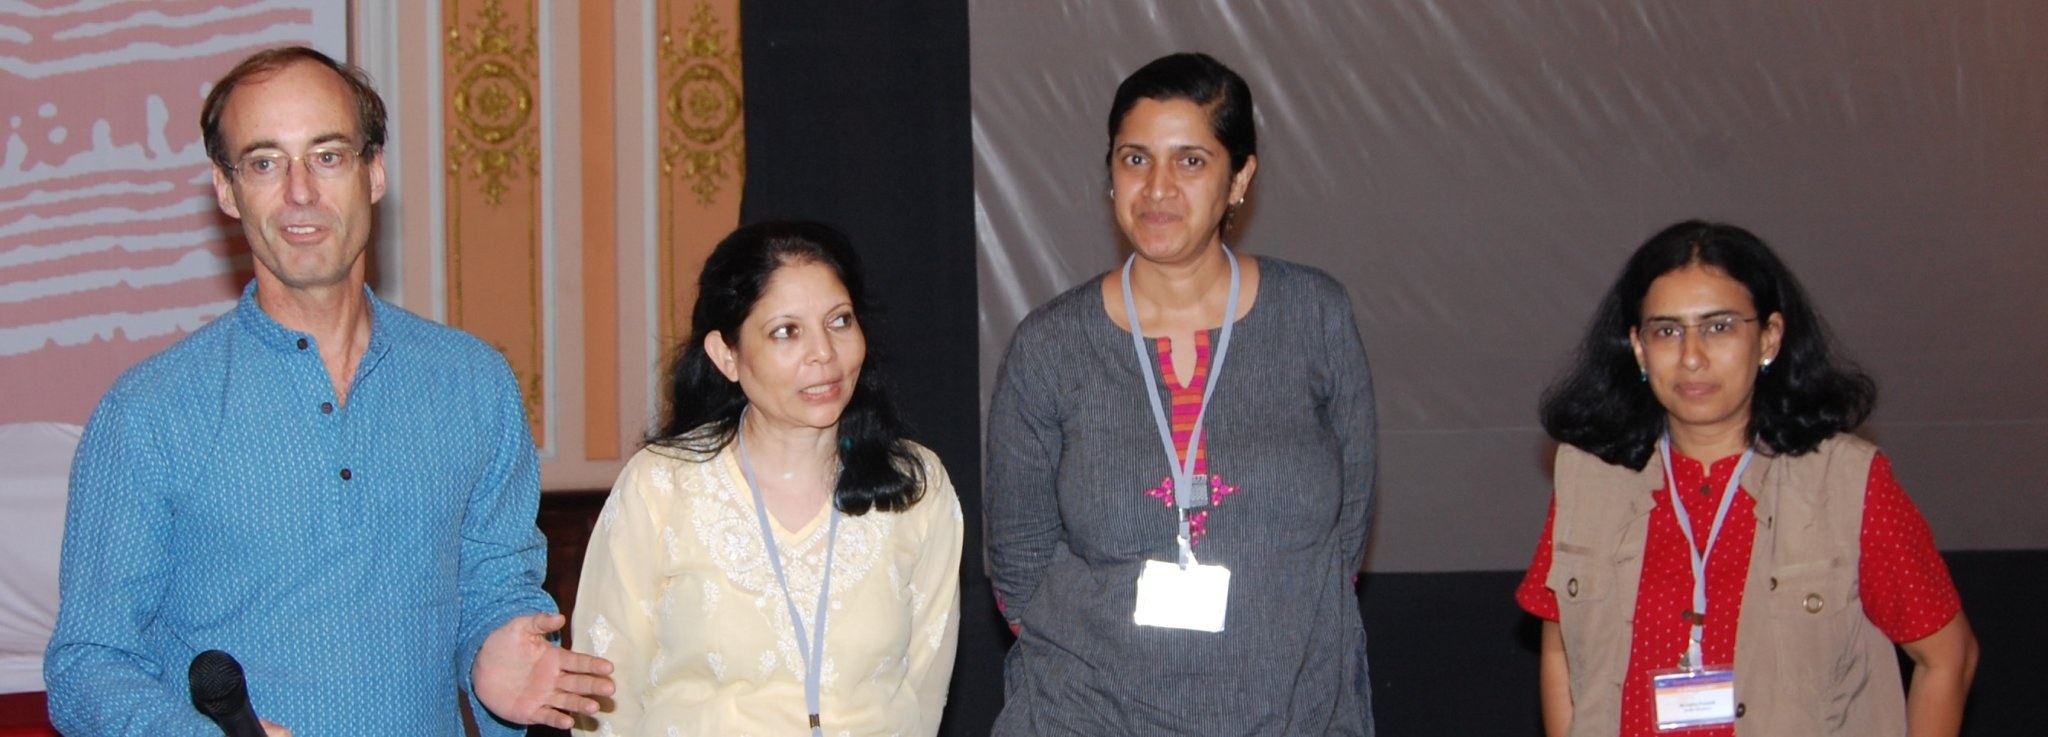 Caption: Ron Vale, Saima Aijaz, Swati Patankar and Mrinalini Puranik, during YIM 2011. Credit: Swati Patankar